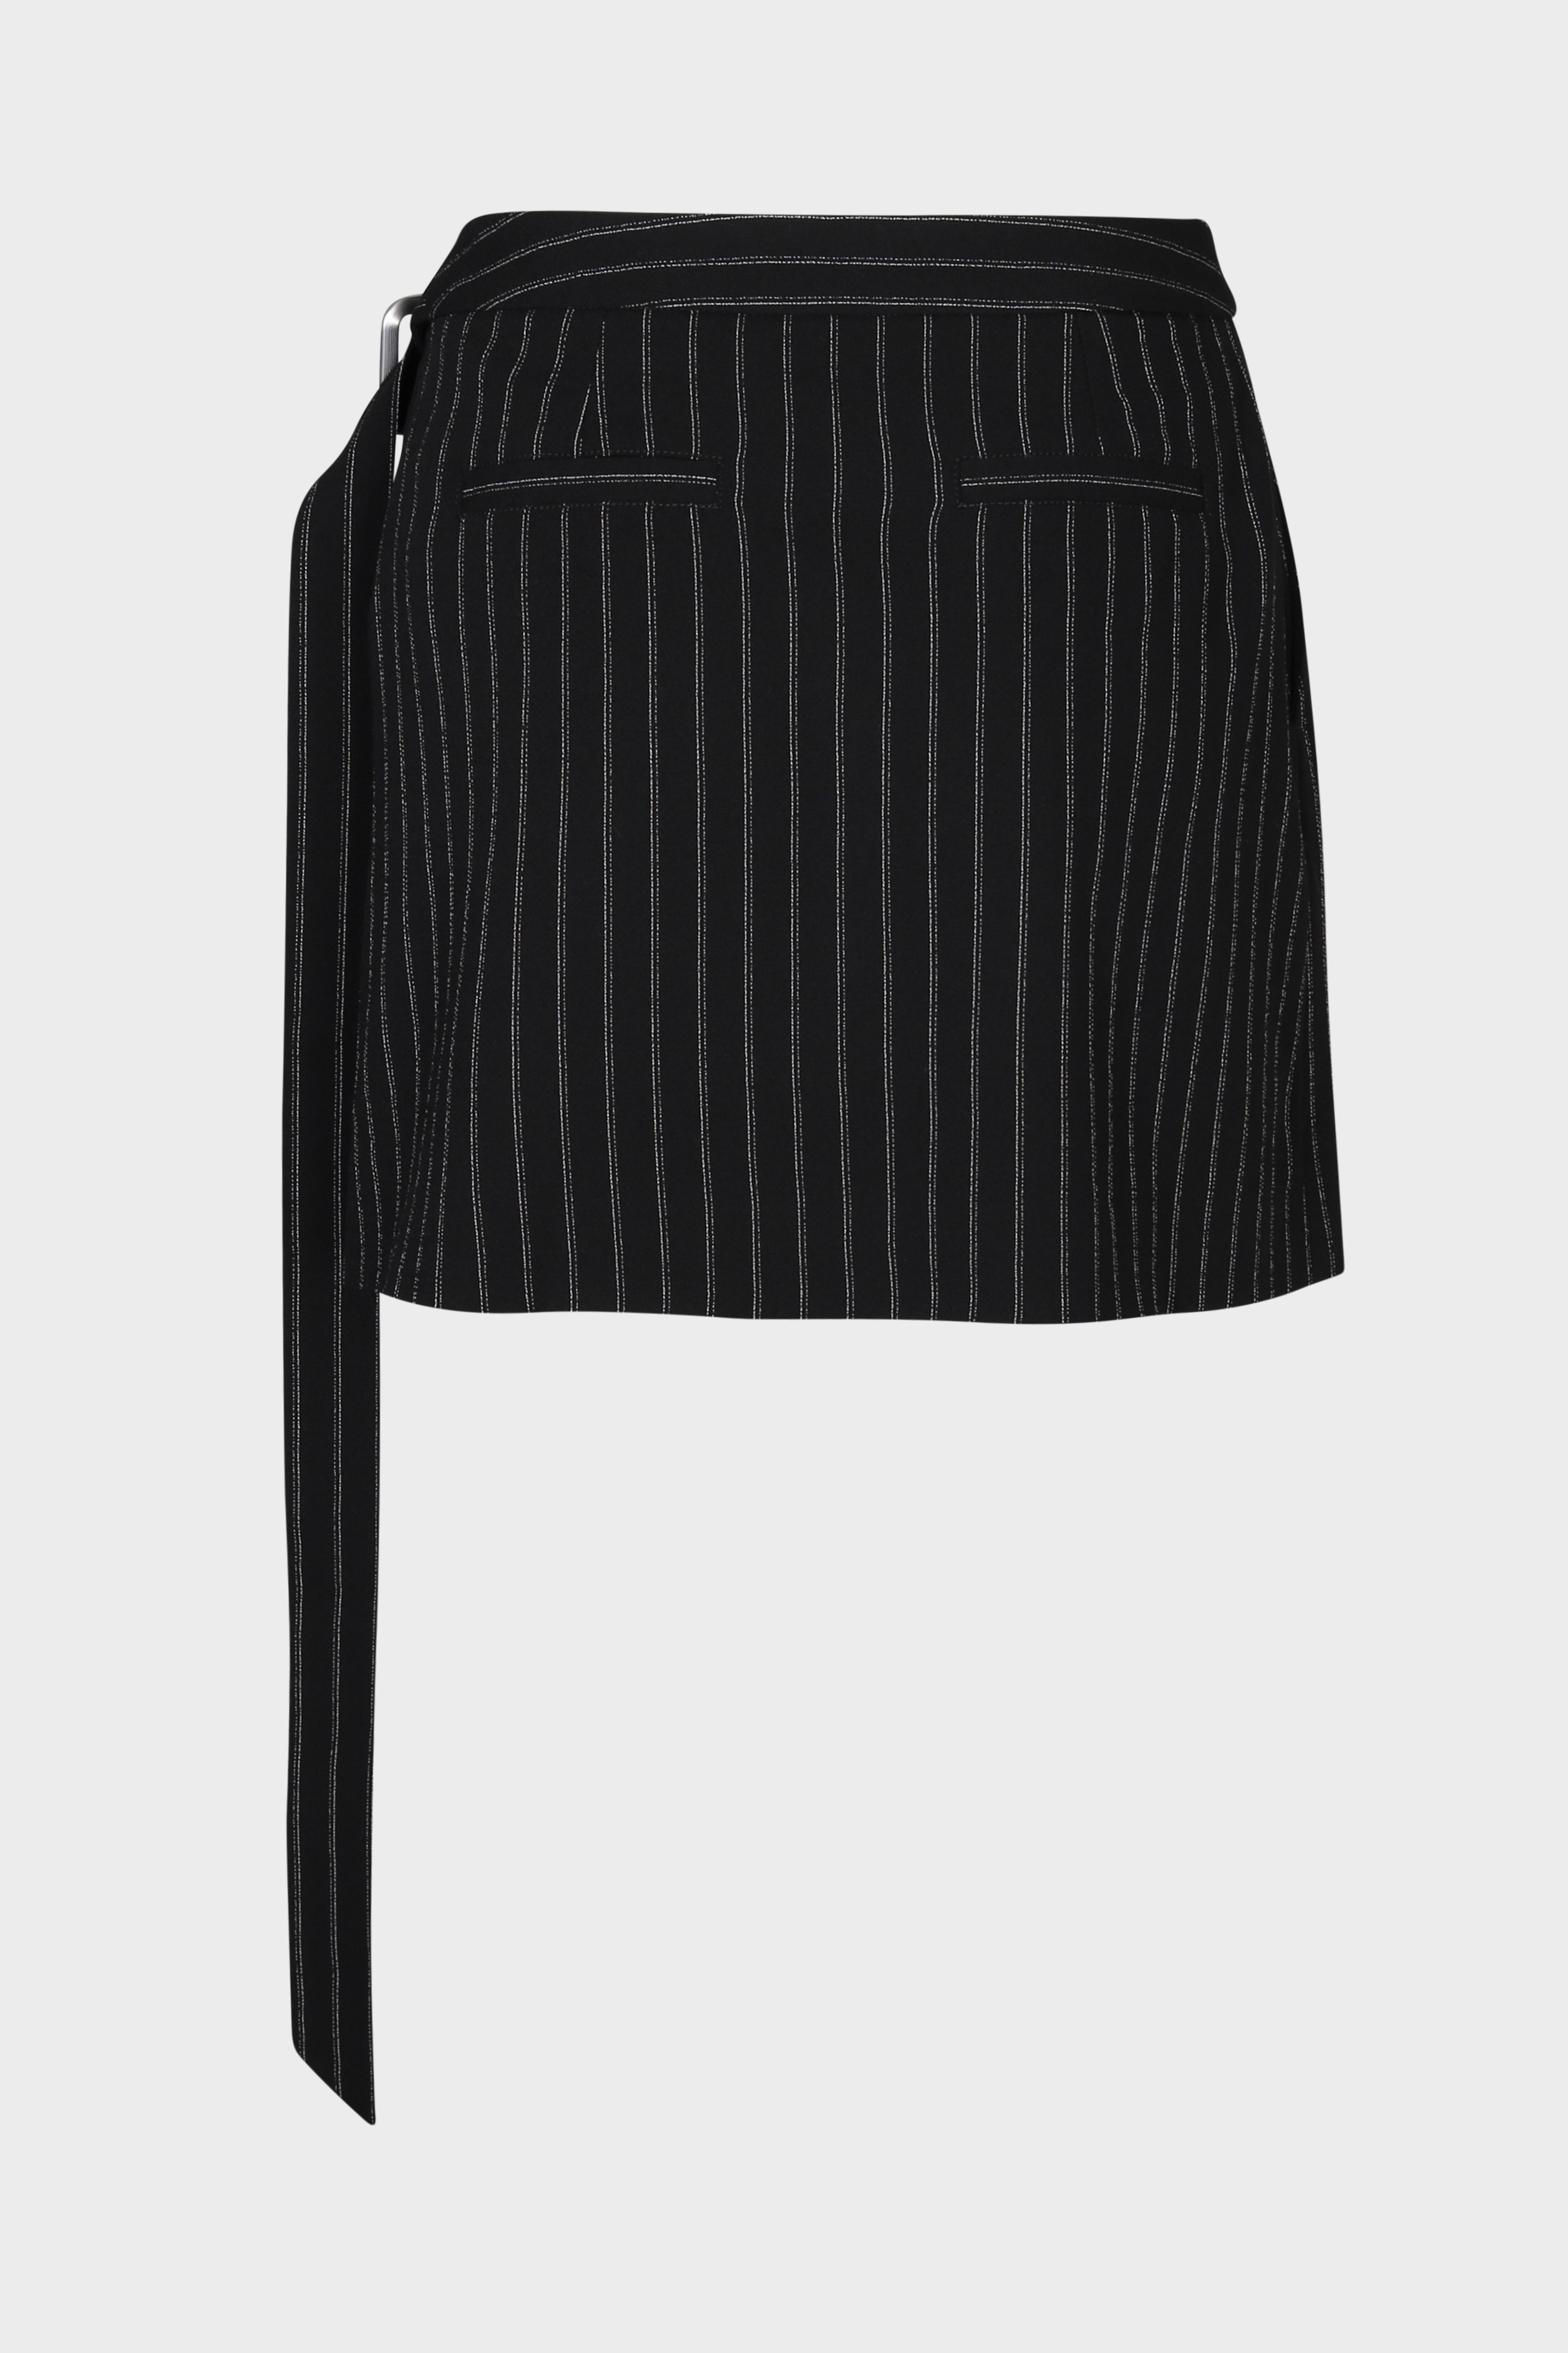 AMI PARIS Ray Mini Belted Skirt in Black/Chalk FR36 / DE34